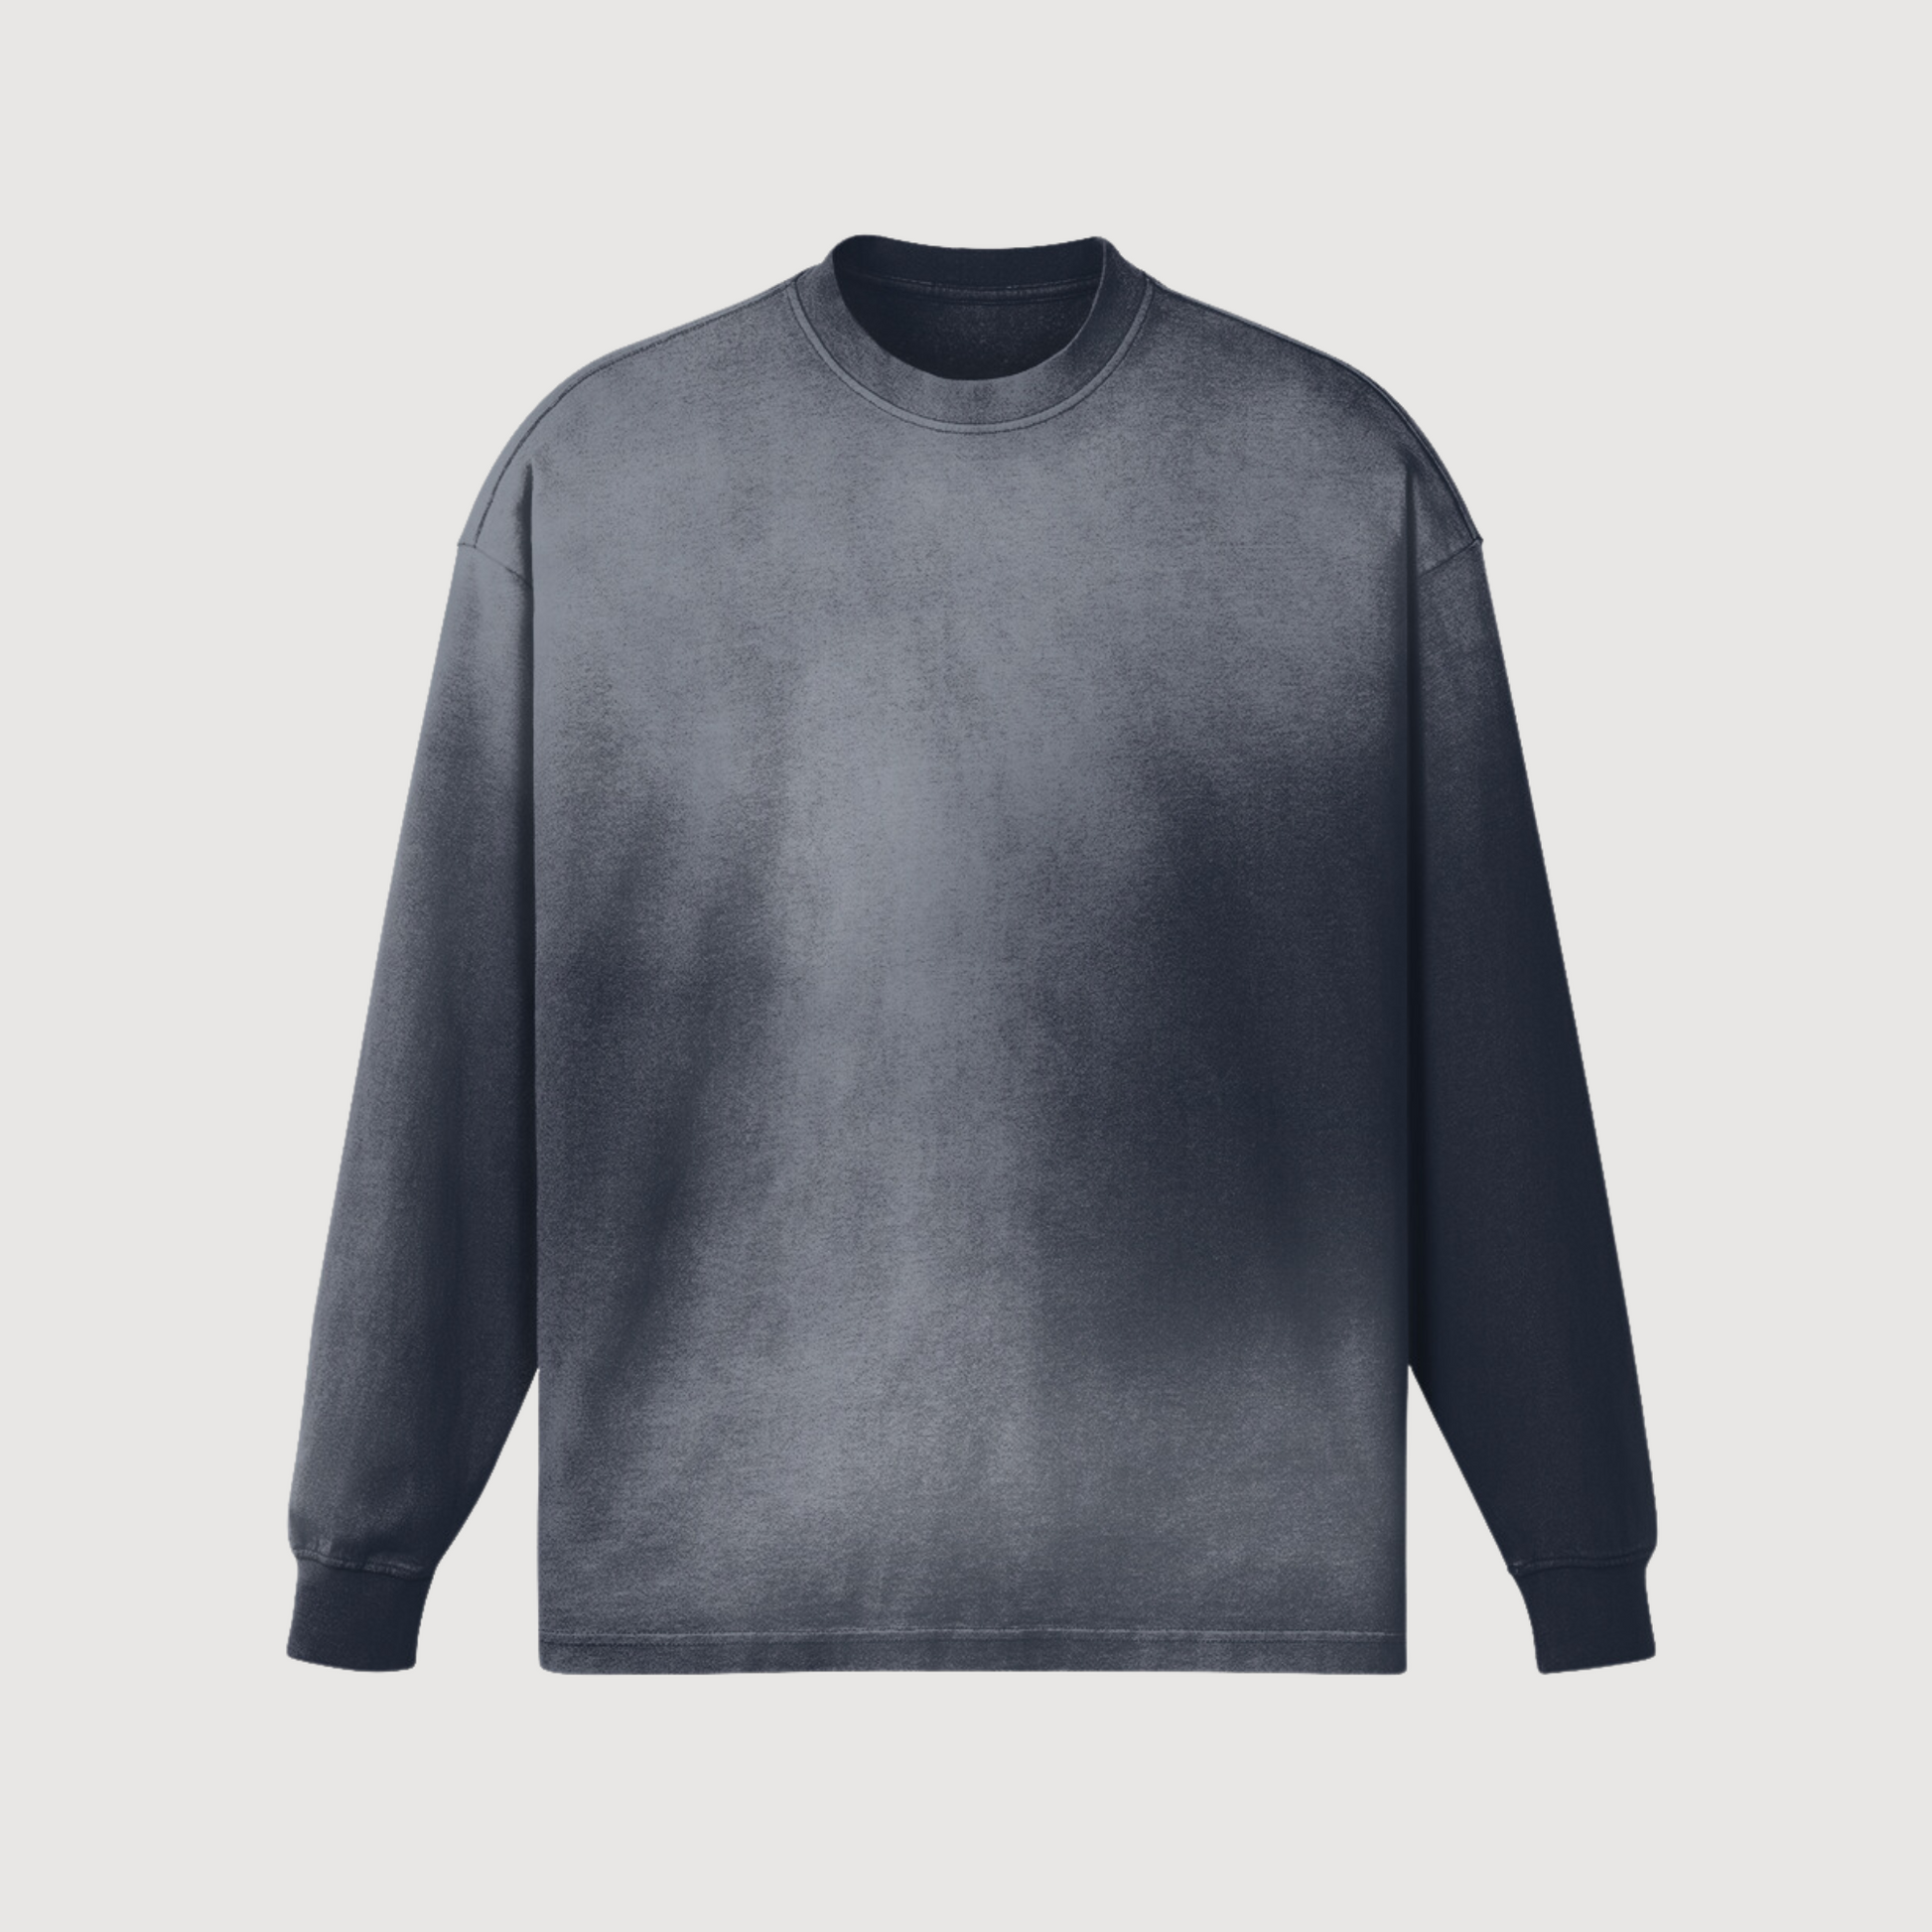 washed dyed oversized crewneck sweatshirt luxury streetwear drop shoulder